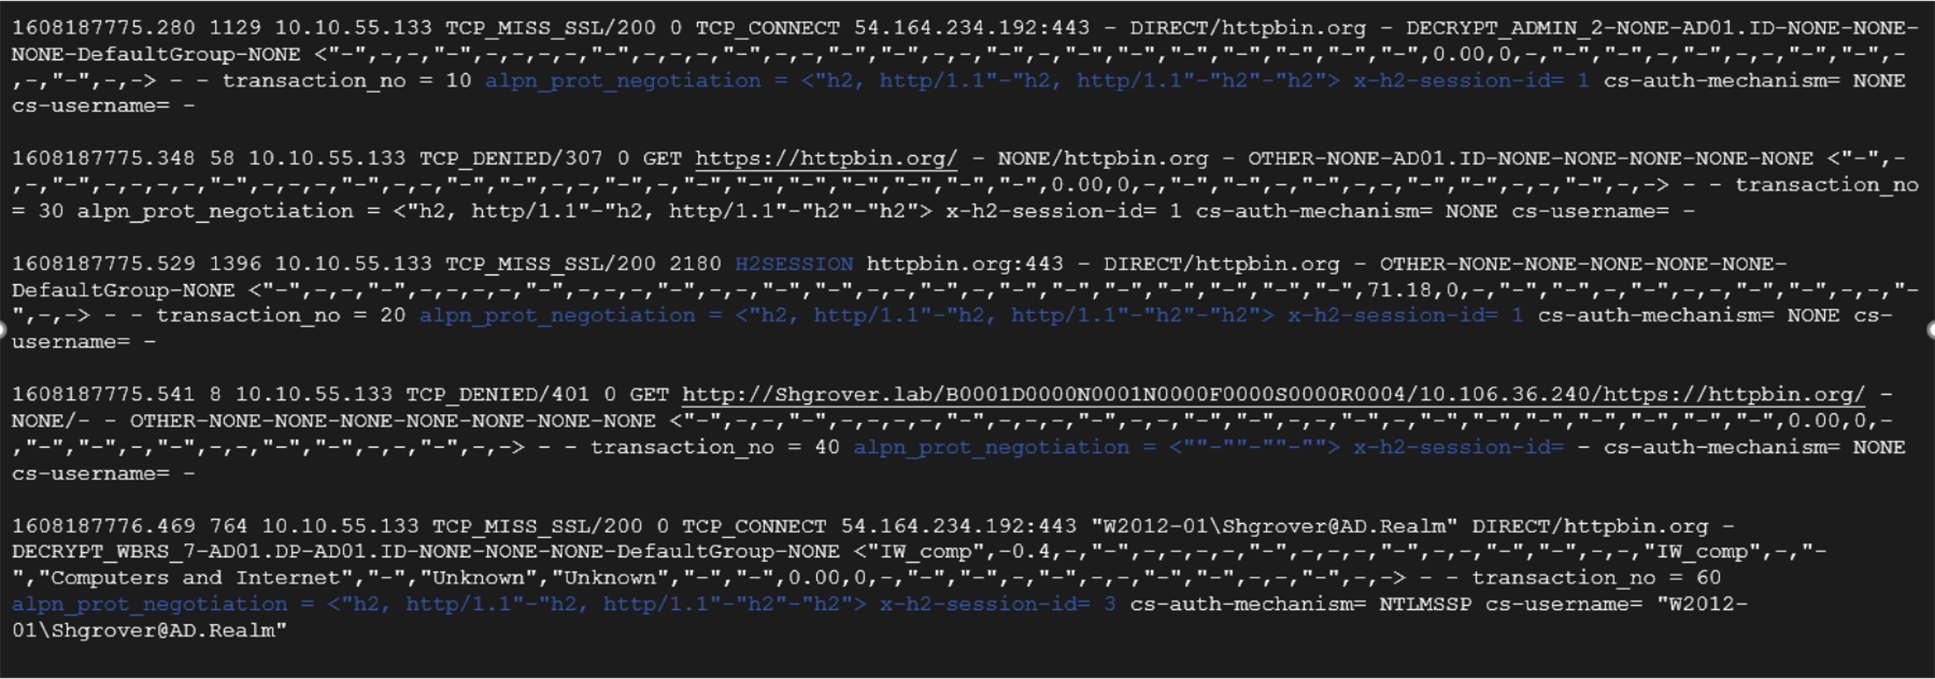 Sample Transparent Proxy Deployment Access Logs showing Authentication Info.